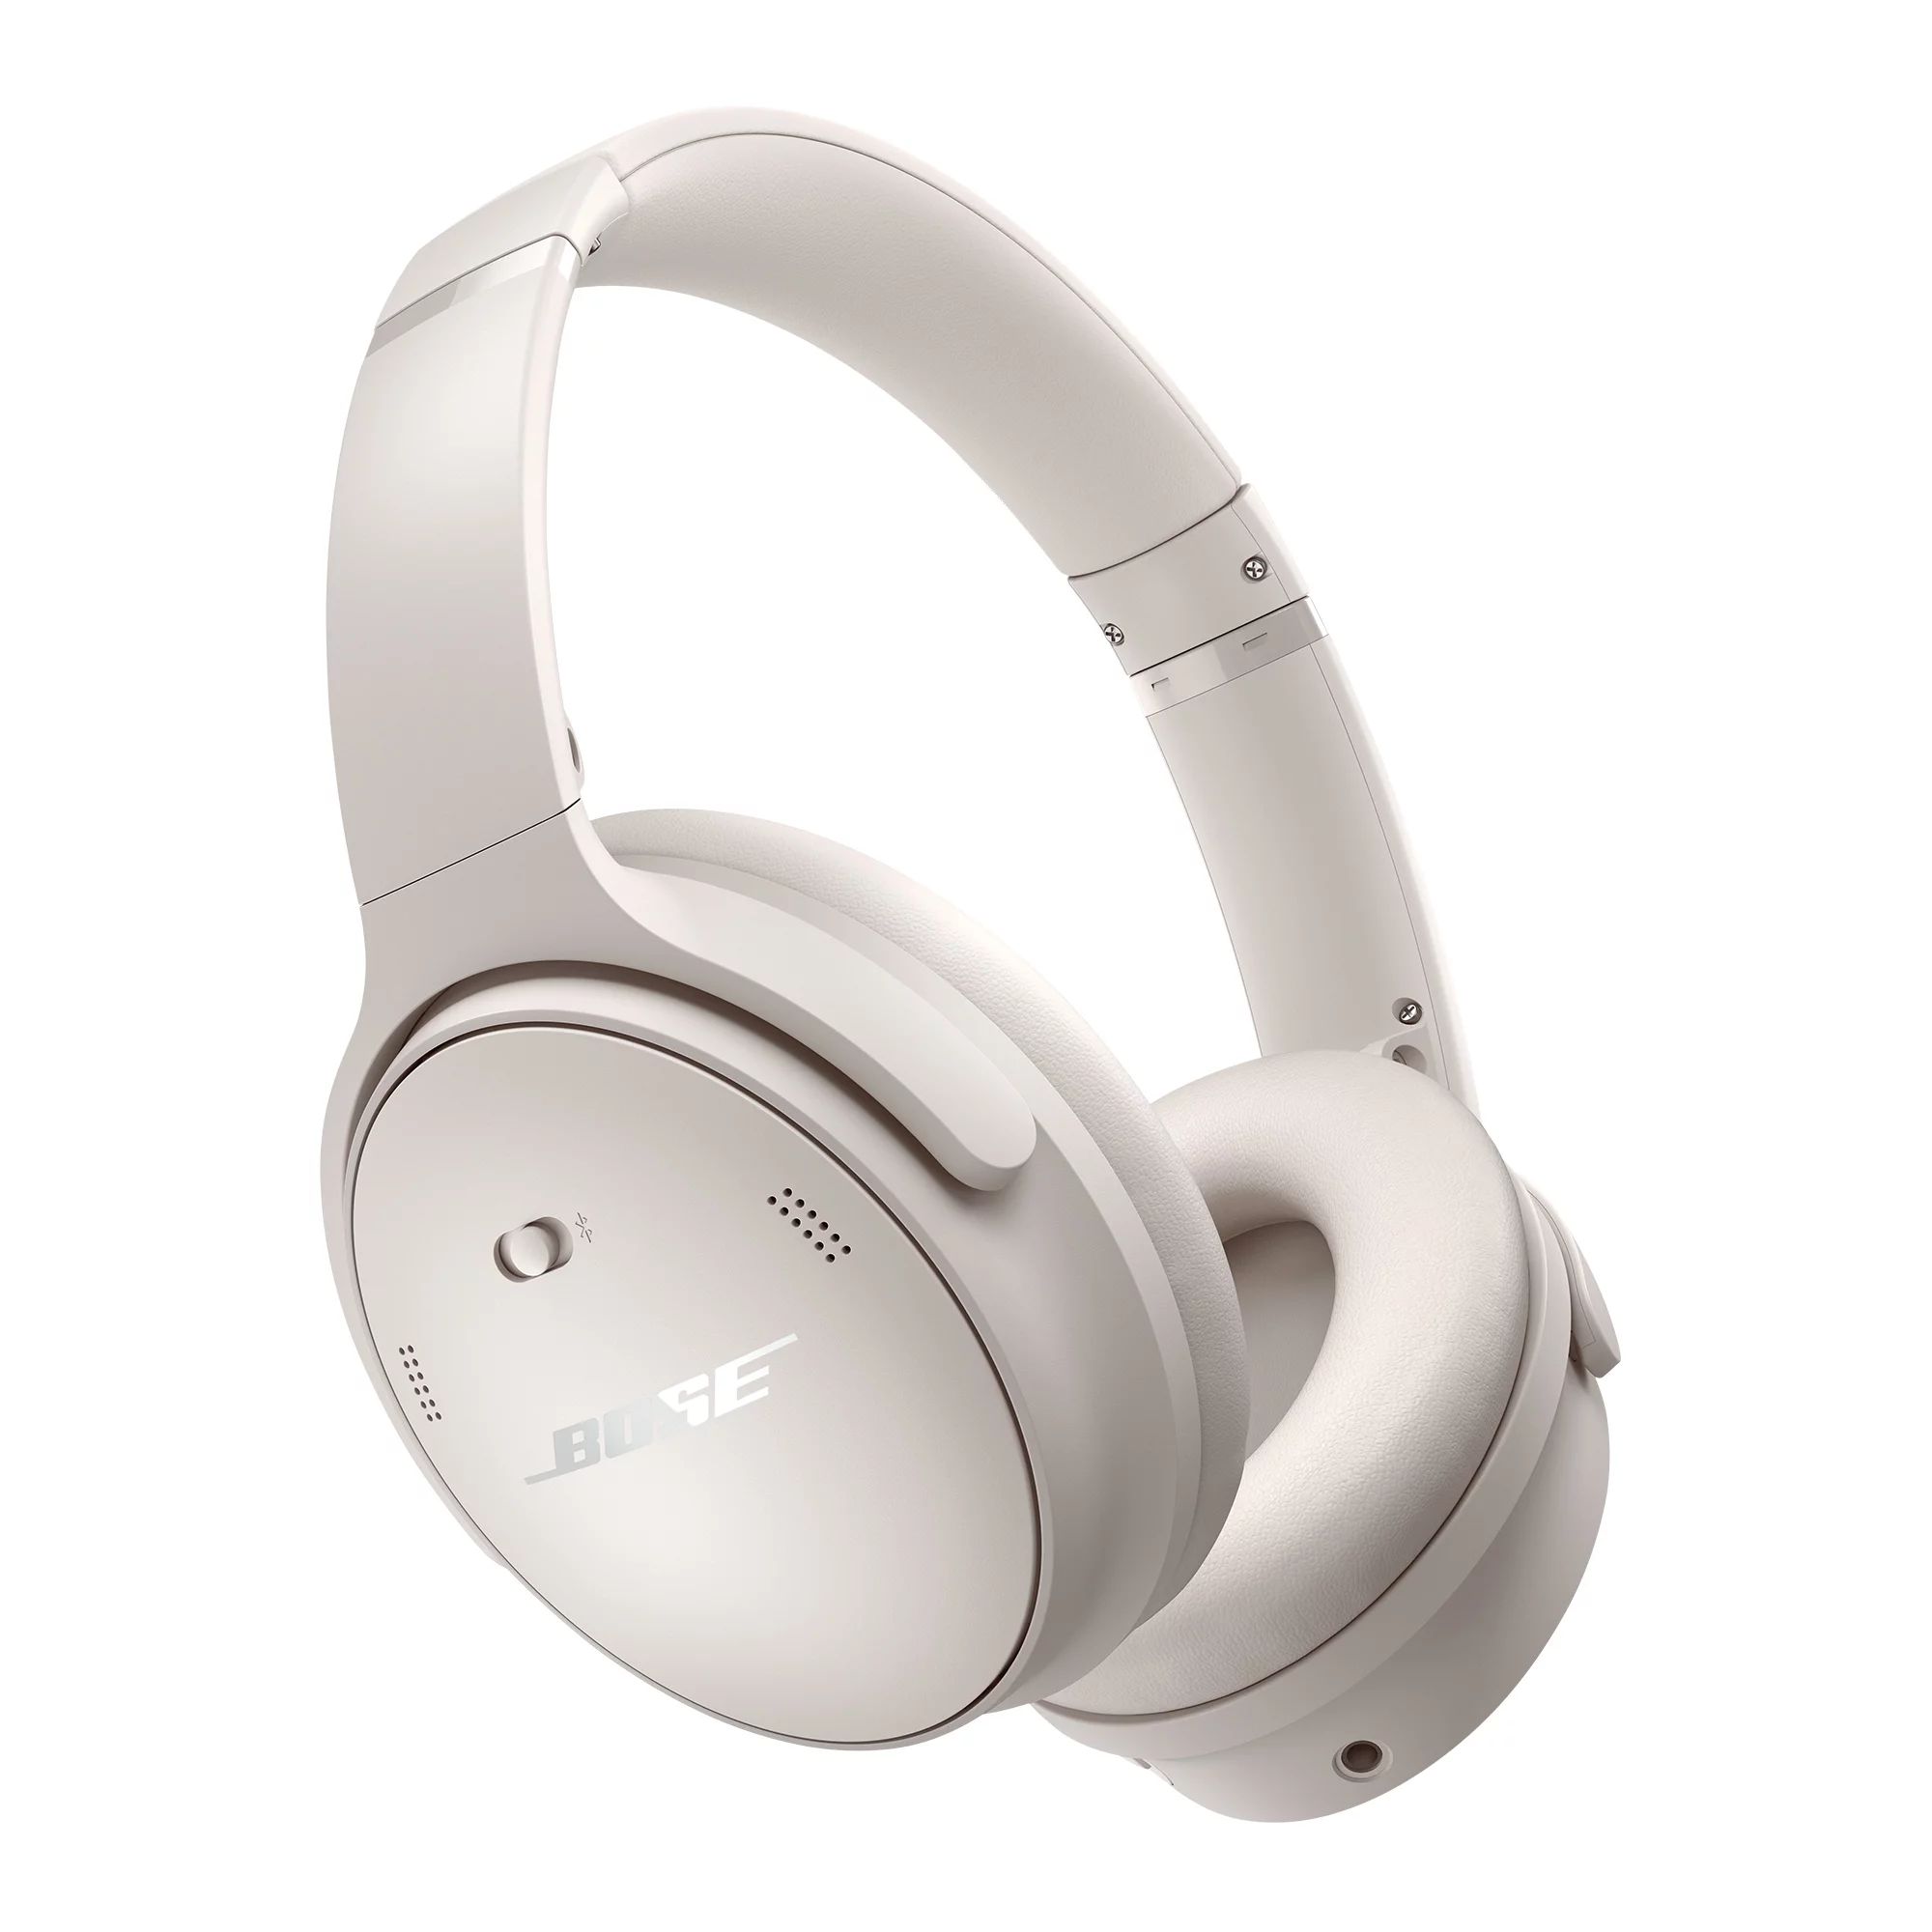 Bose QuietComfort Headphones Noise Cancelling Over-Ear Wireless Bluetooth Earphones, White Smoke | Walmart (US)